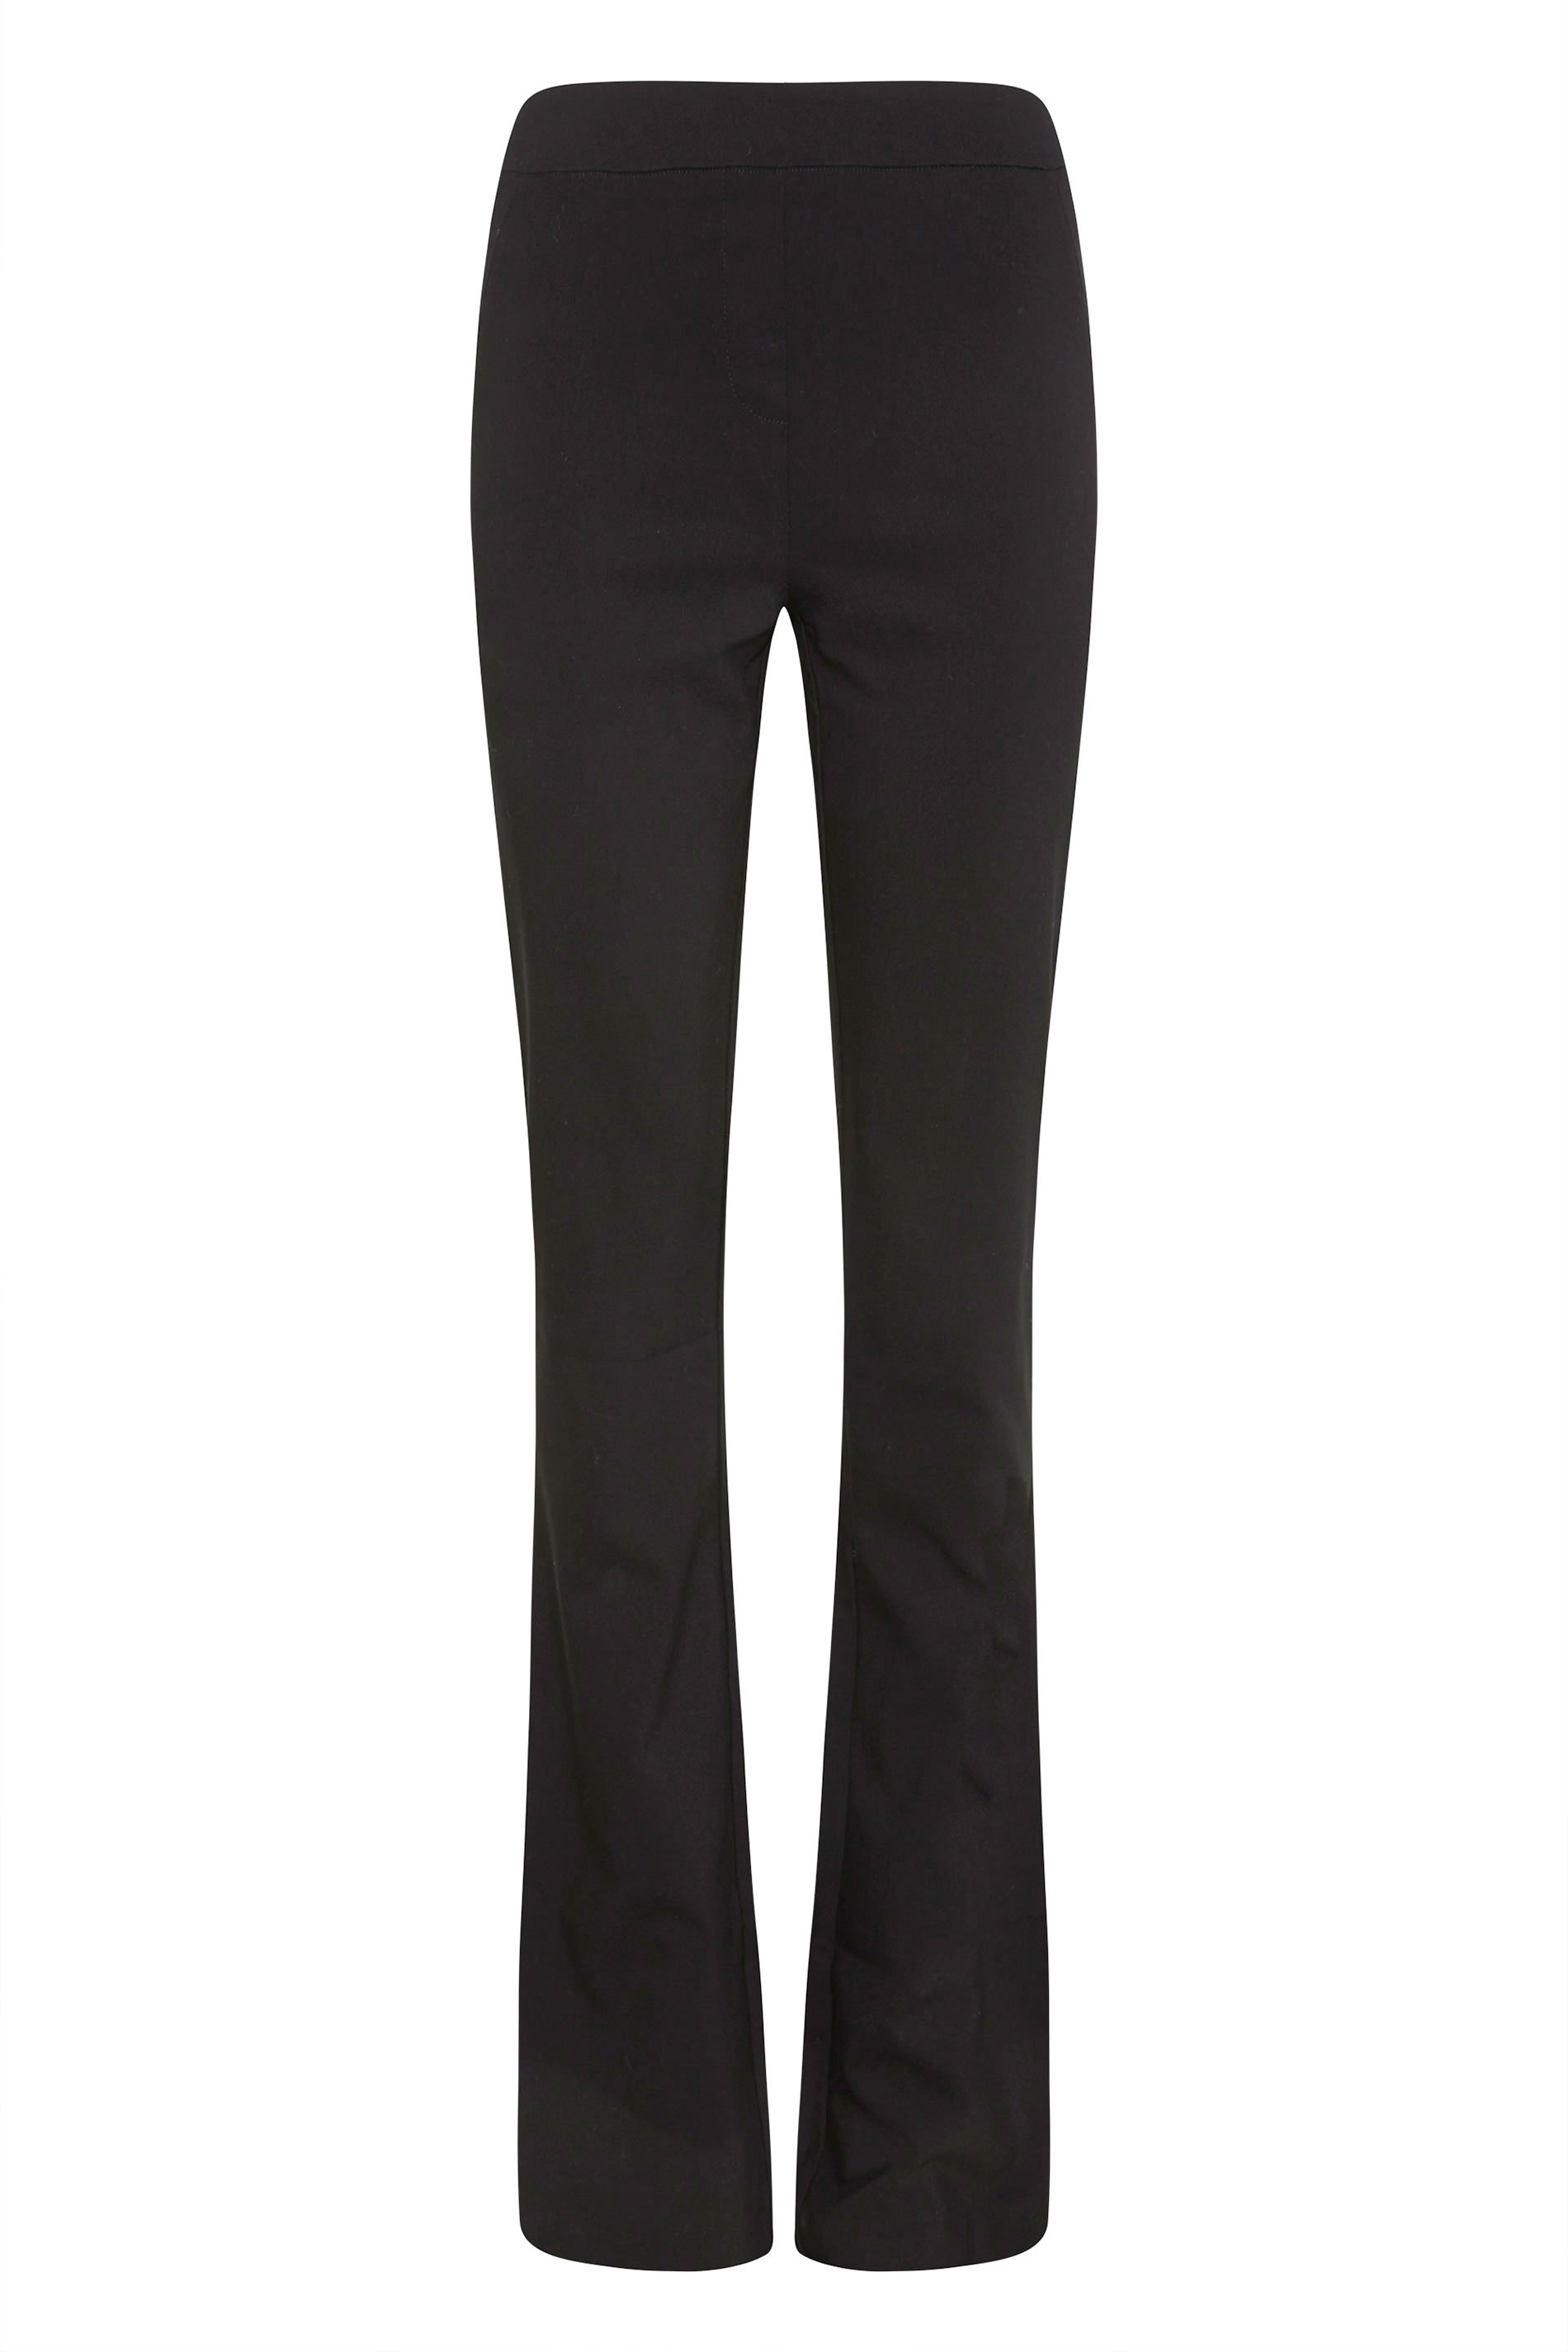 Long Tall Sally - LTS Tall Stretch Scuba Wide Leg Trousers - Women's Black  : Amazon.co.uk: Fashion